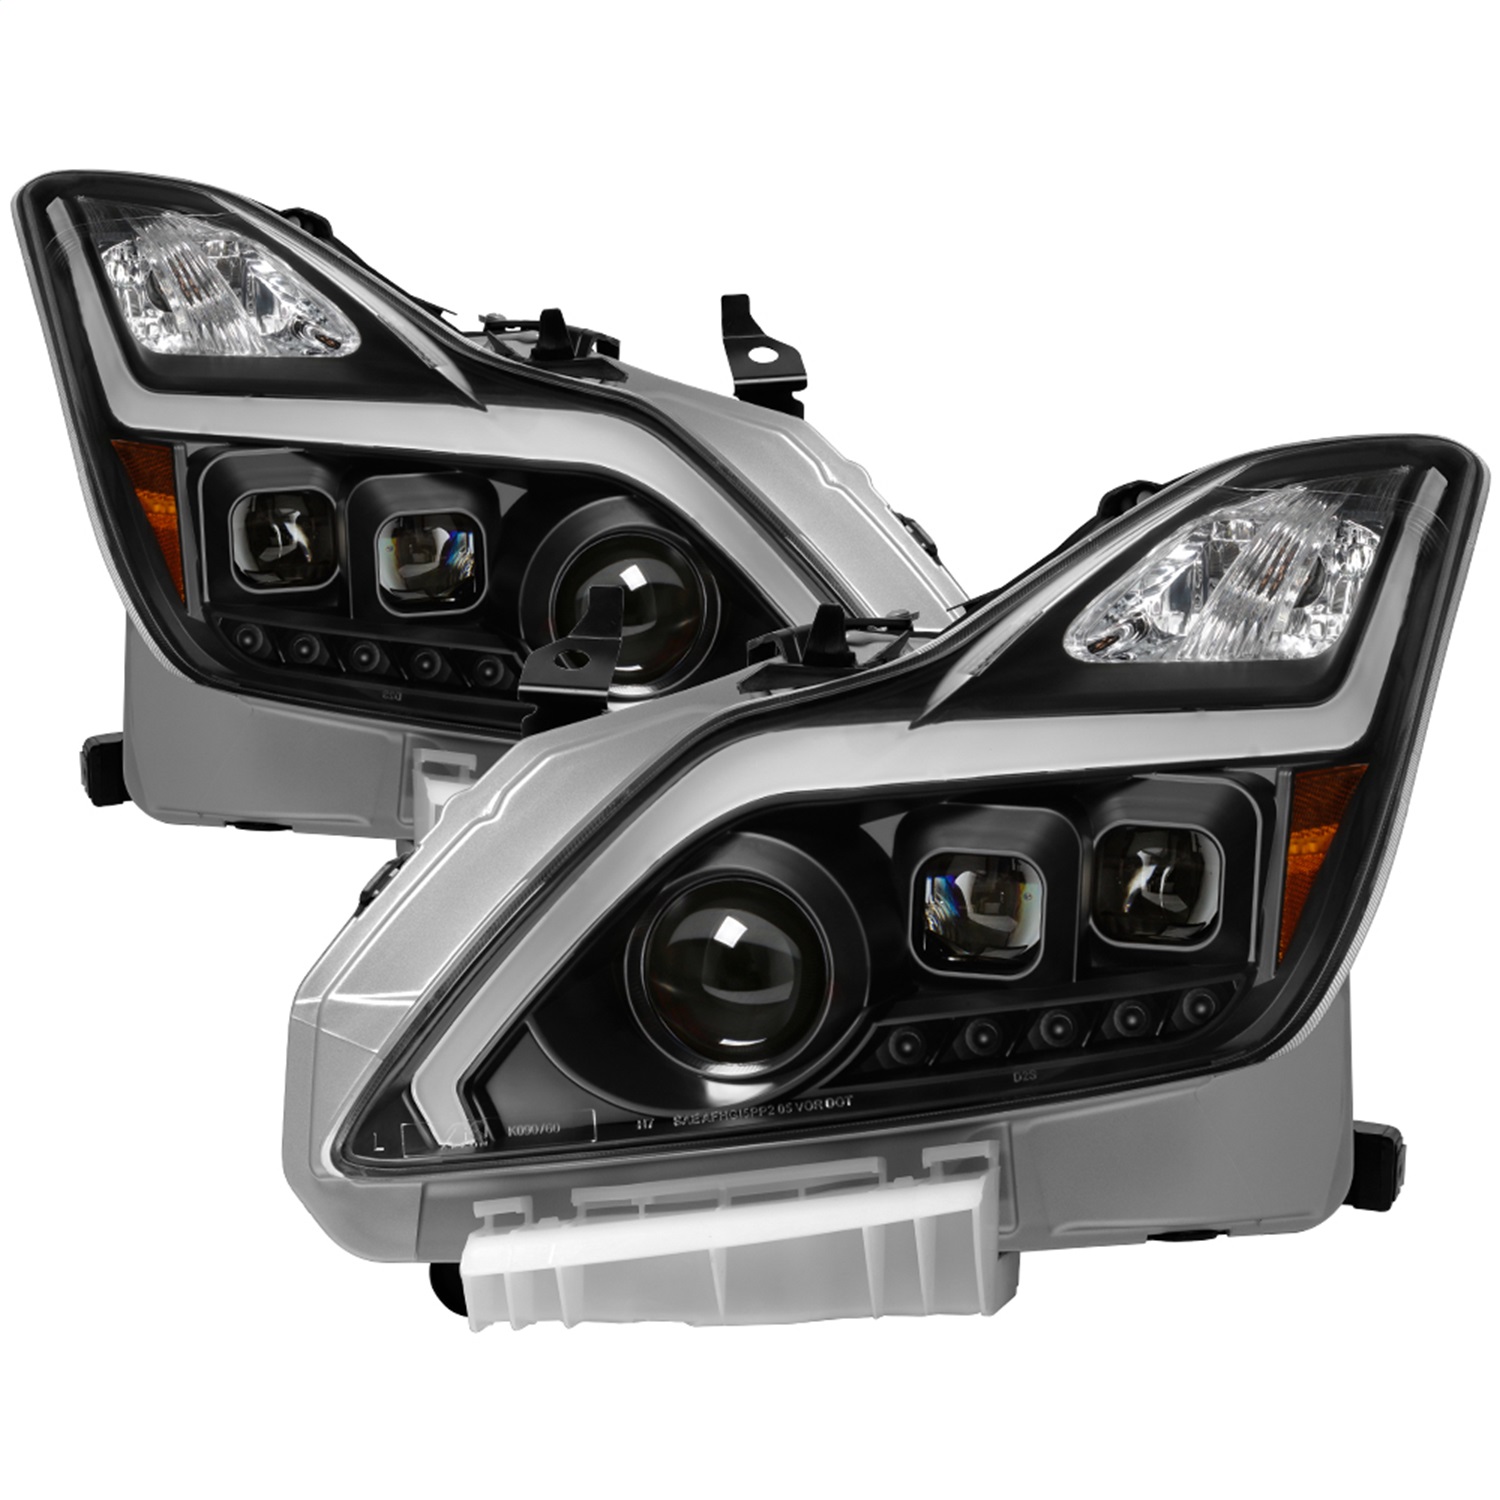 Spyder Auto 9039331 XTune DRL Light Bar Projector Headlights Fits 08-13 G37